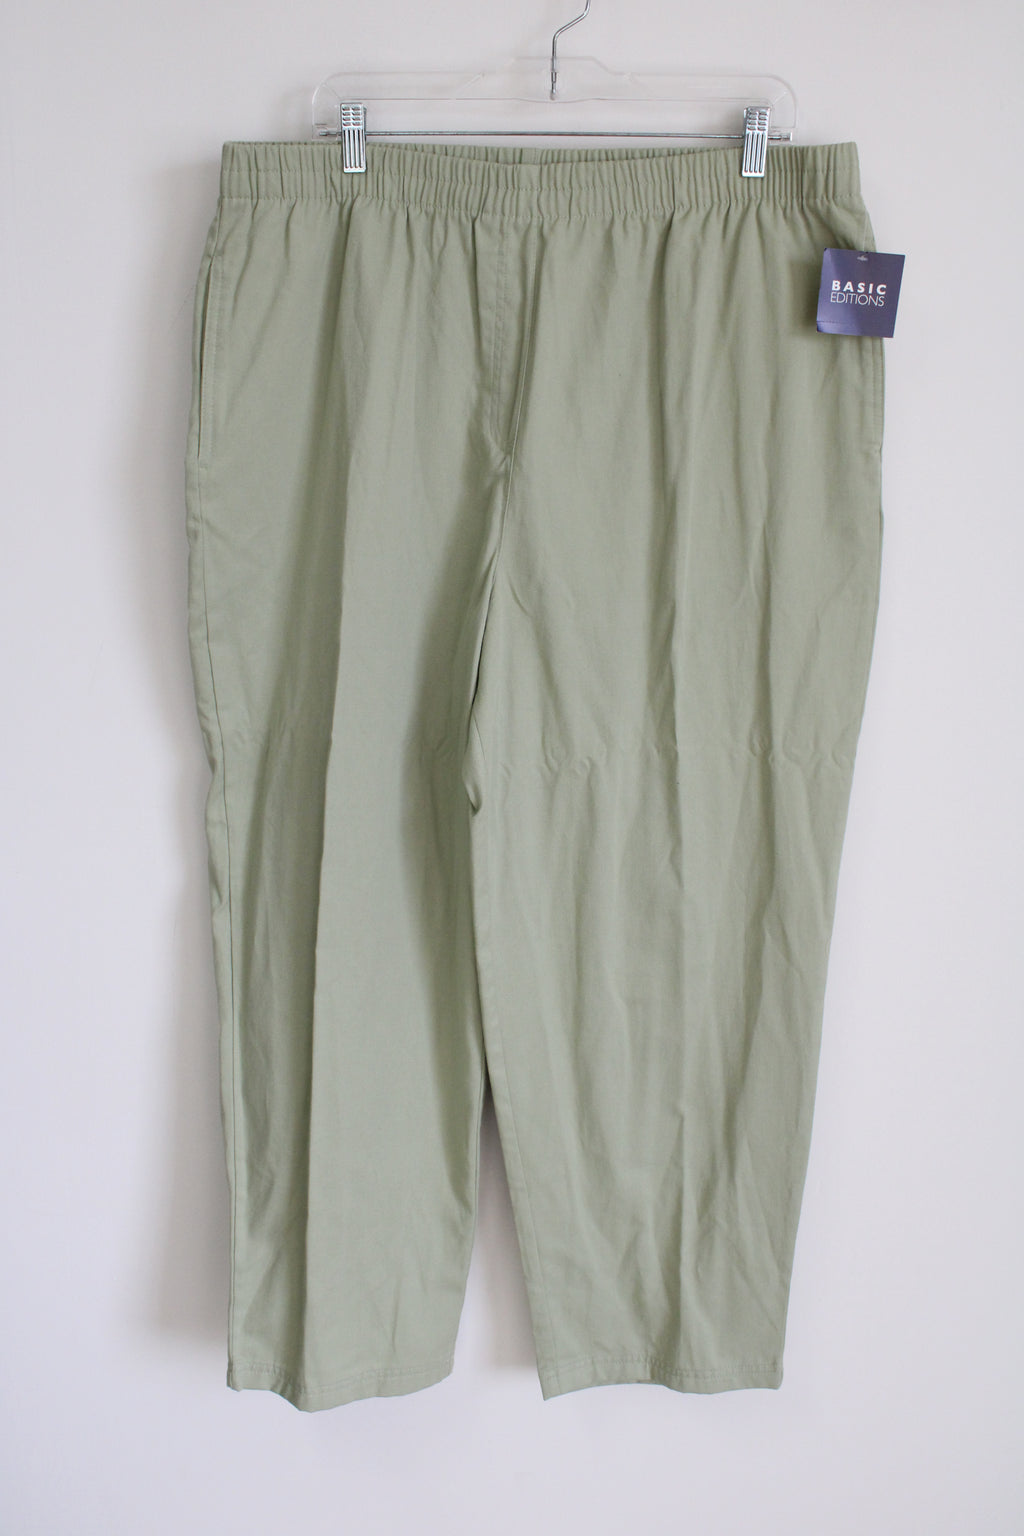 NEW Basic Editions Twill Green Pant | 2X Short